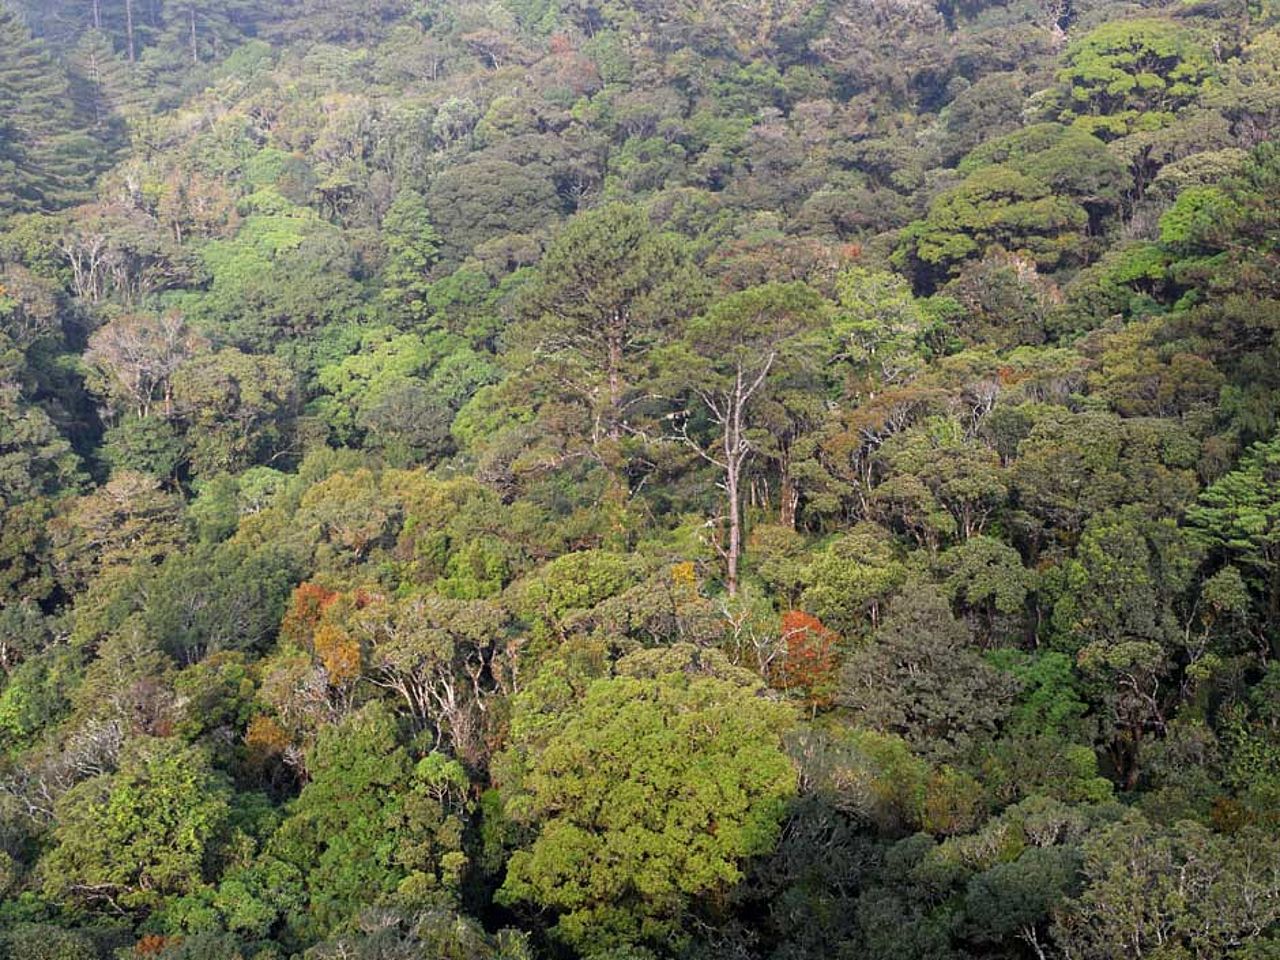 Intakter Regenwald in Gefahr ©OroVerde